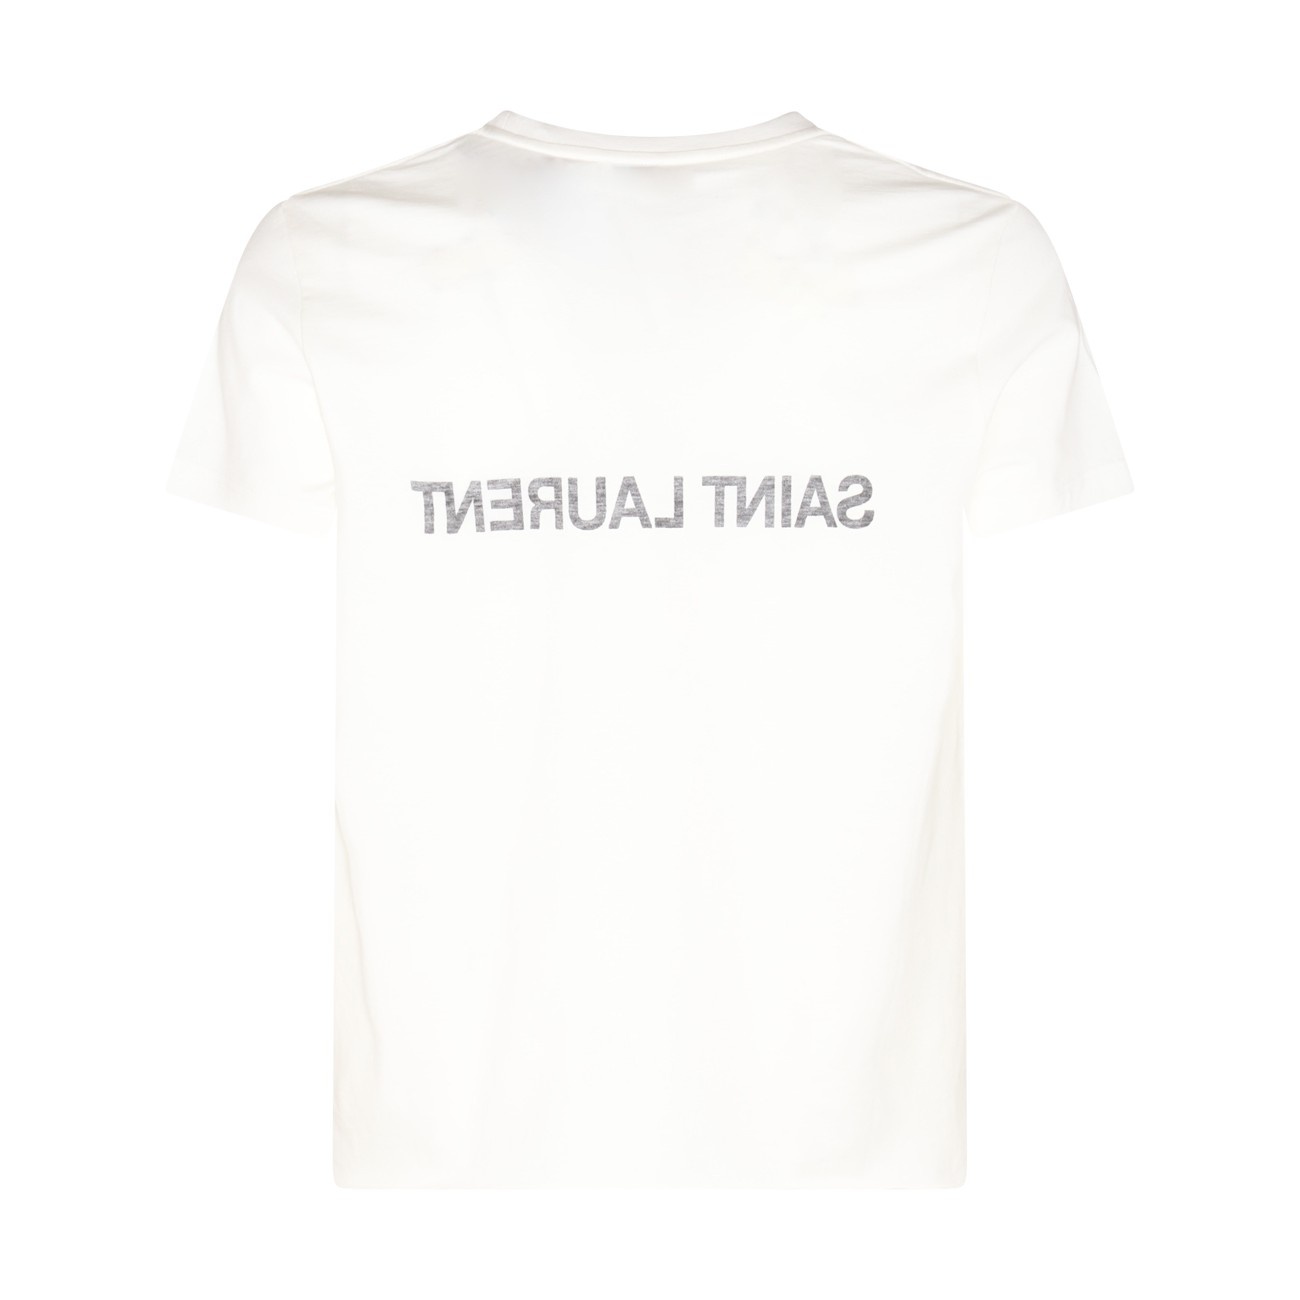 white cotton t-shirt - 2